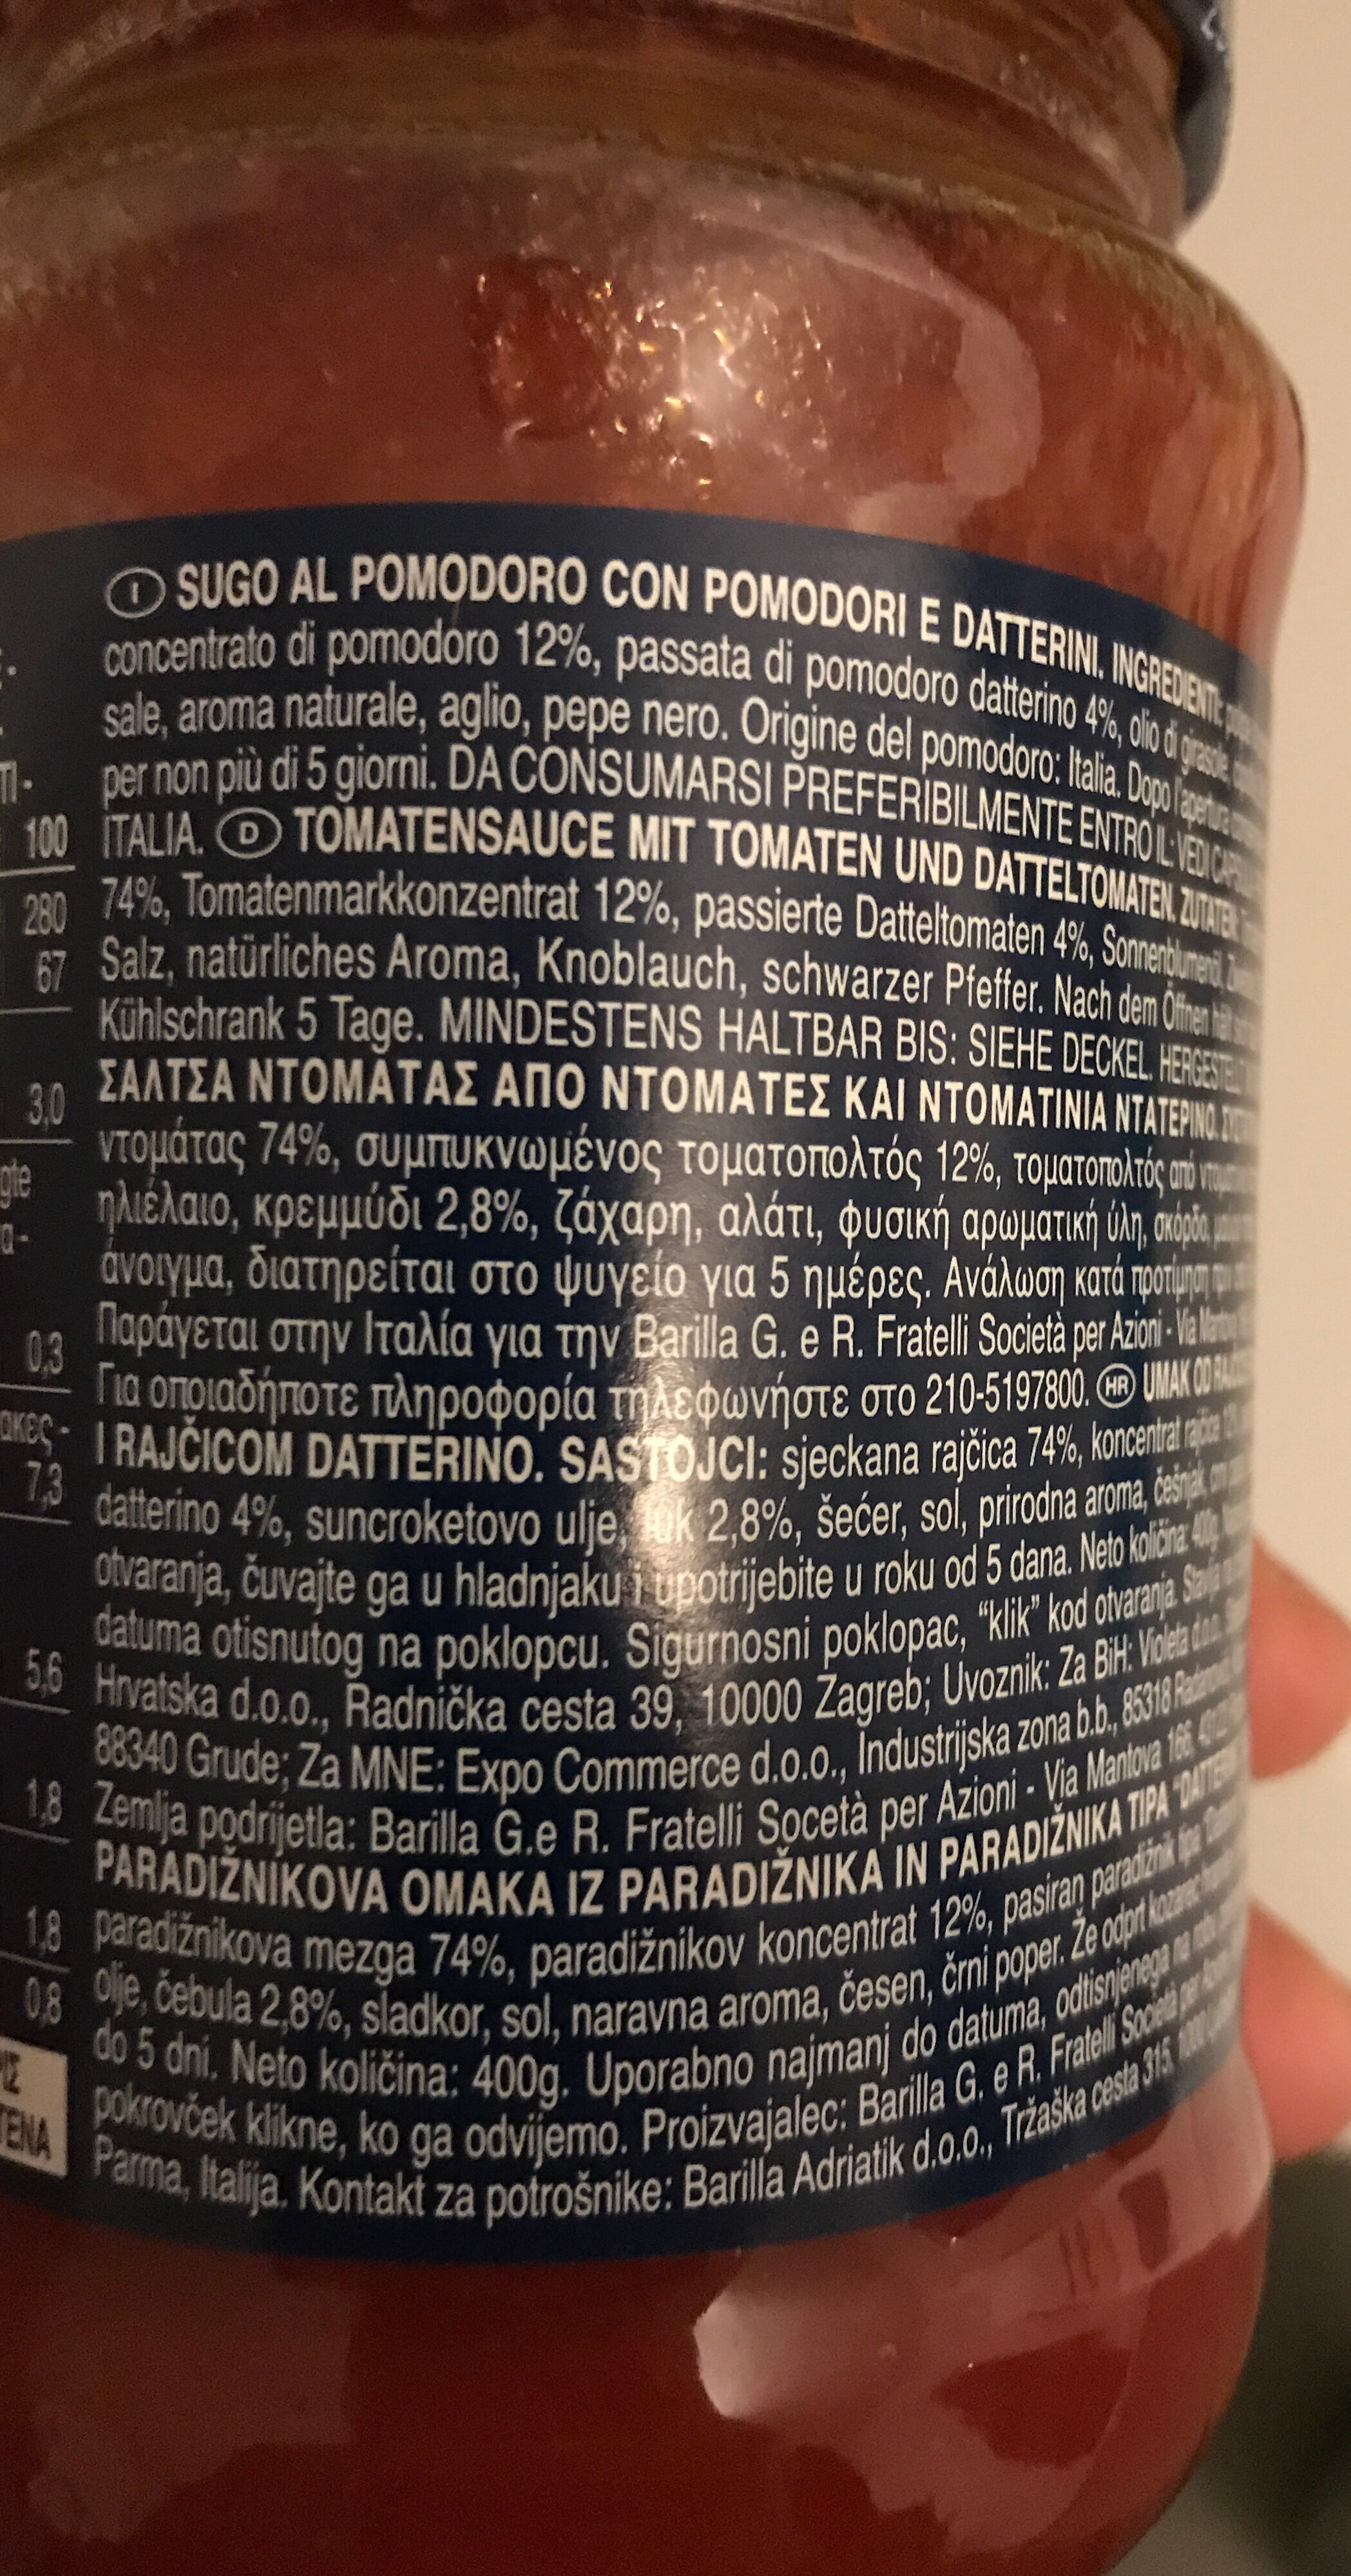 Pomodori e Datterini - Ingredients - en